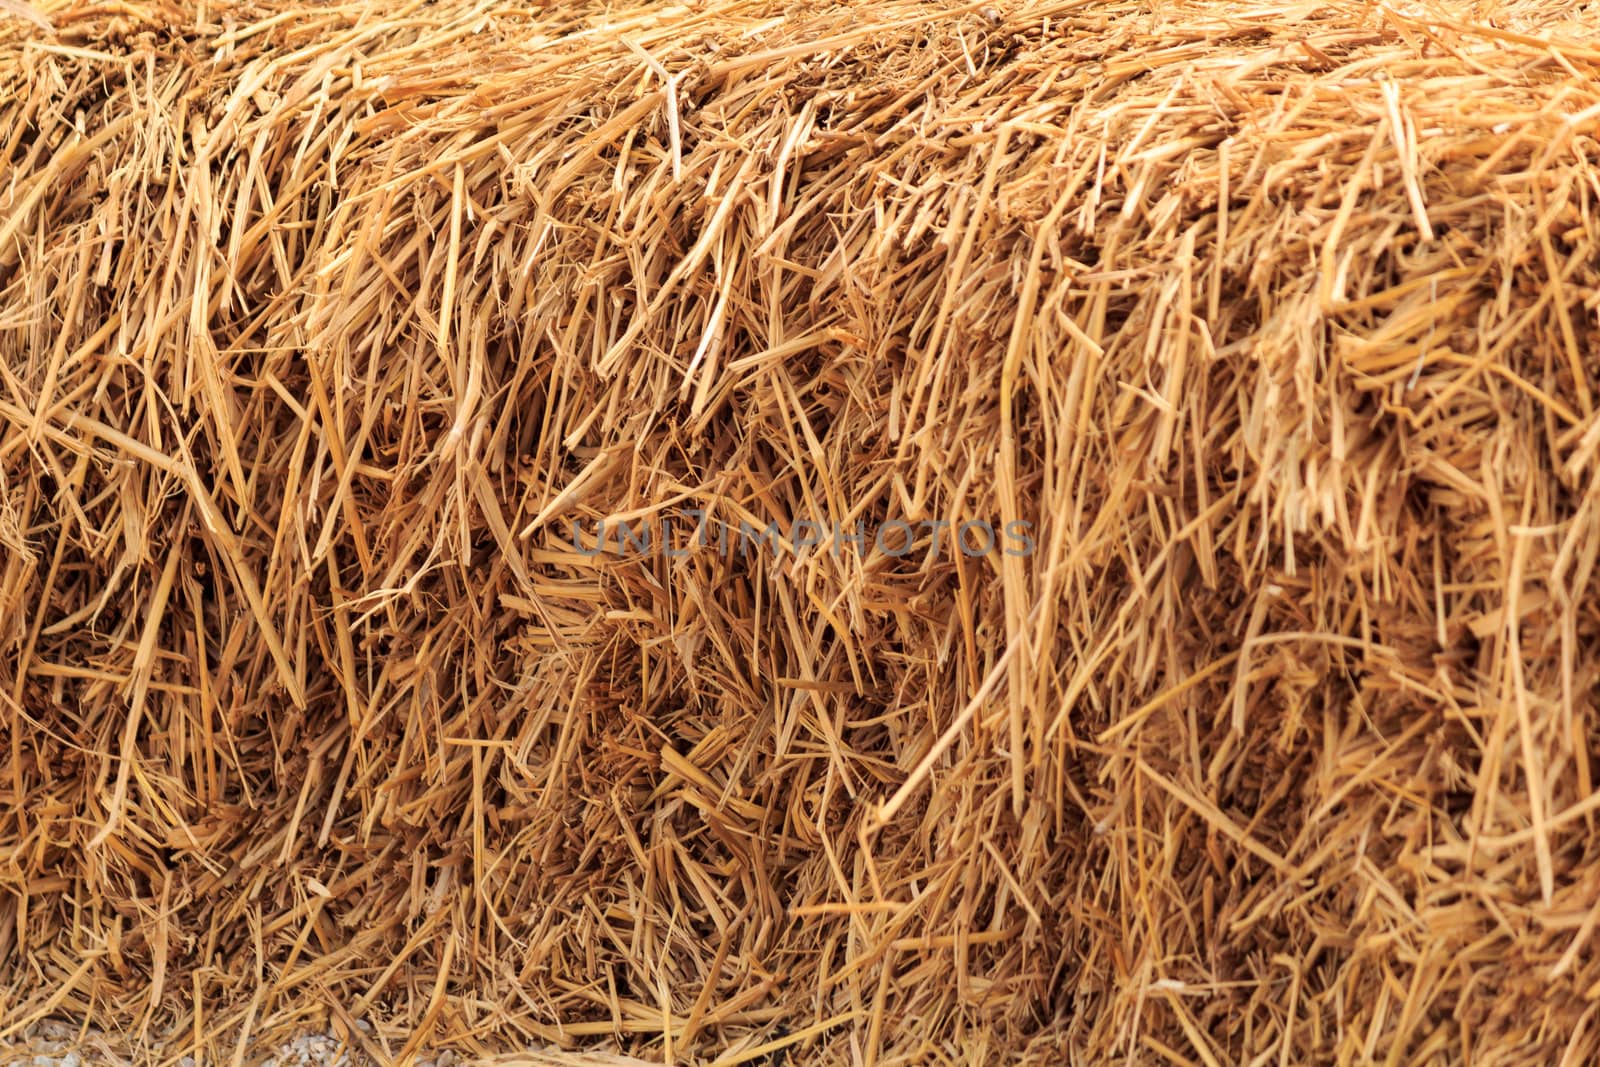 Bale golden straw texture, ruminants animal food background.